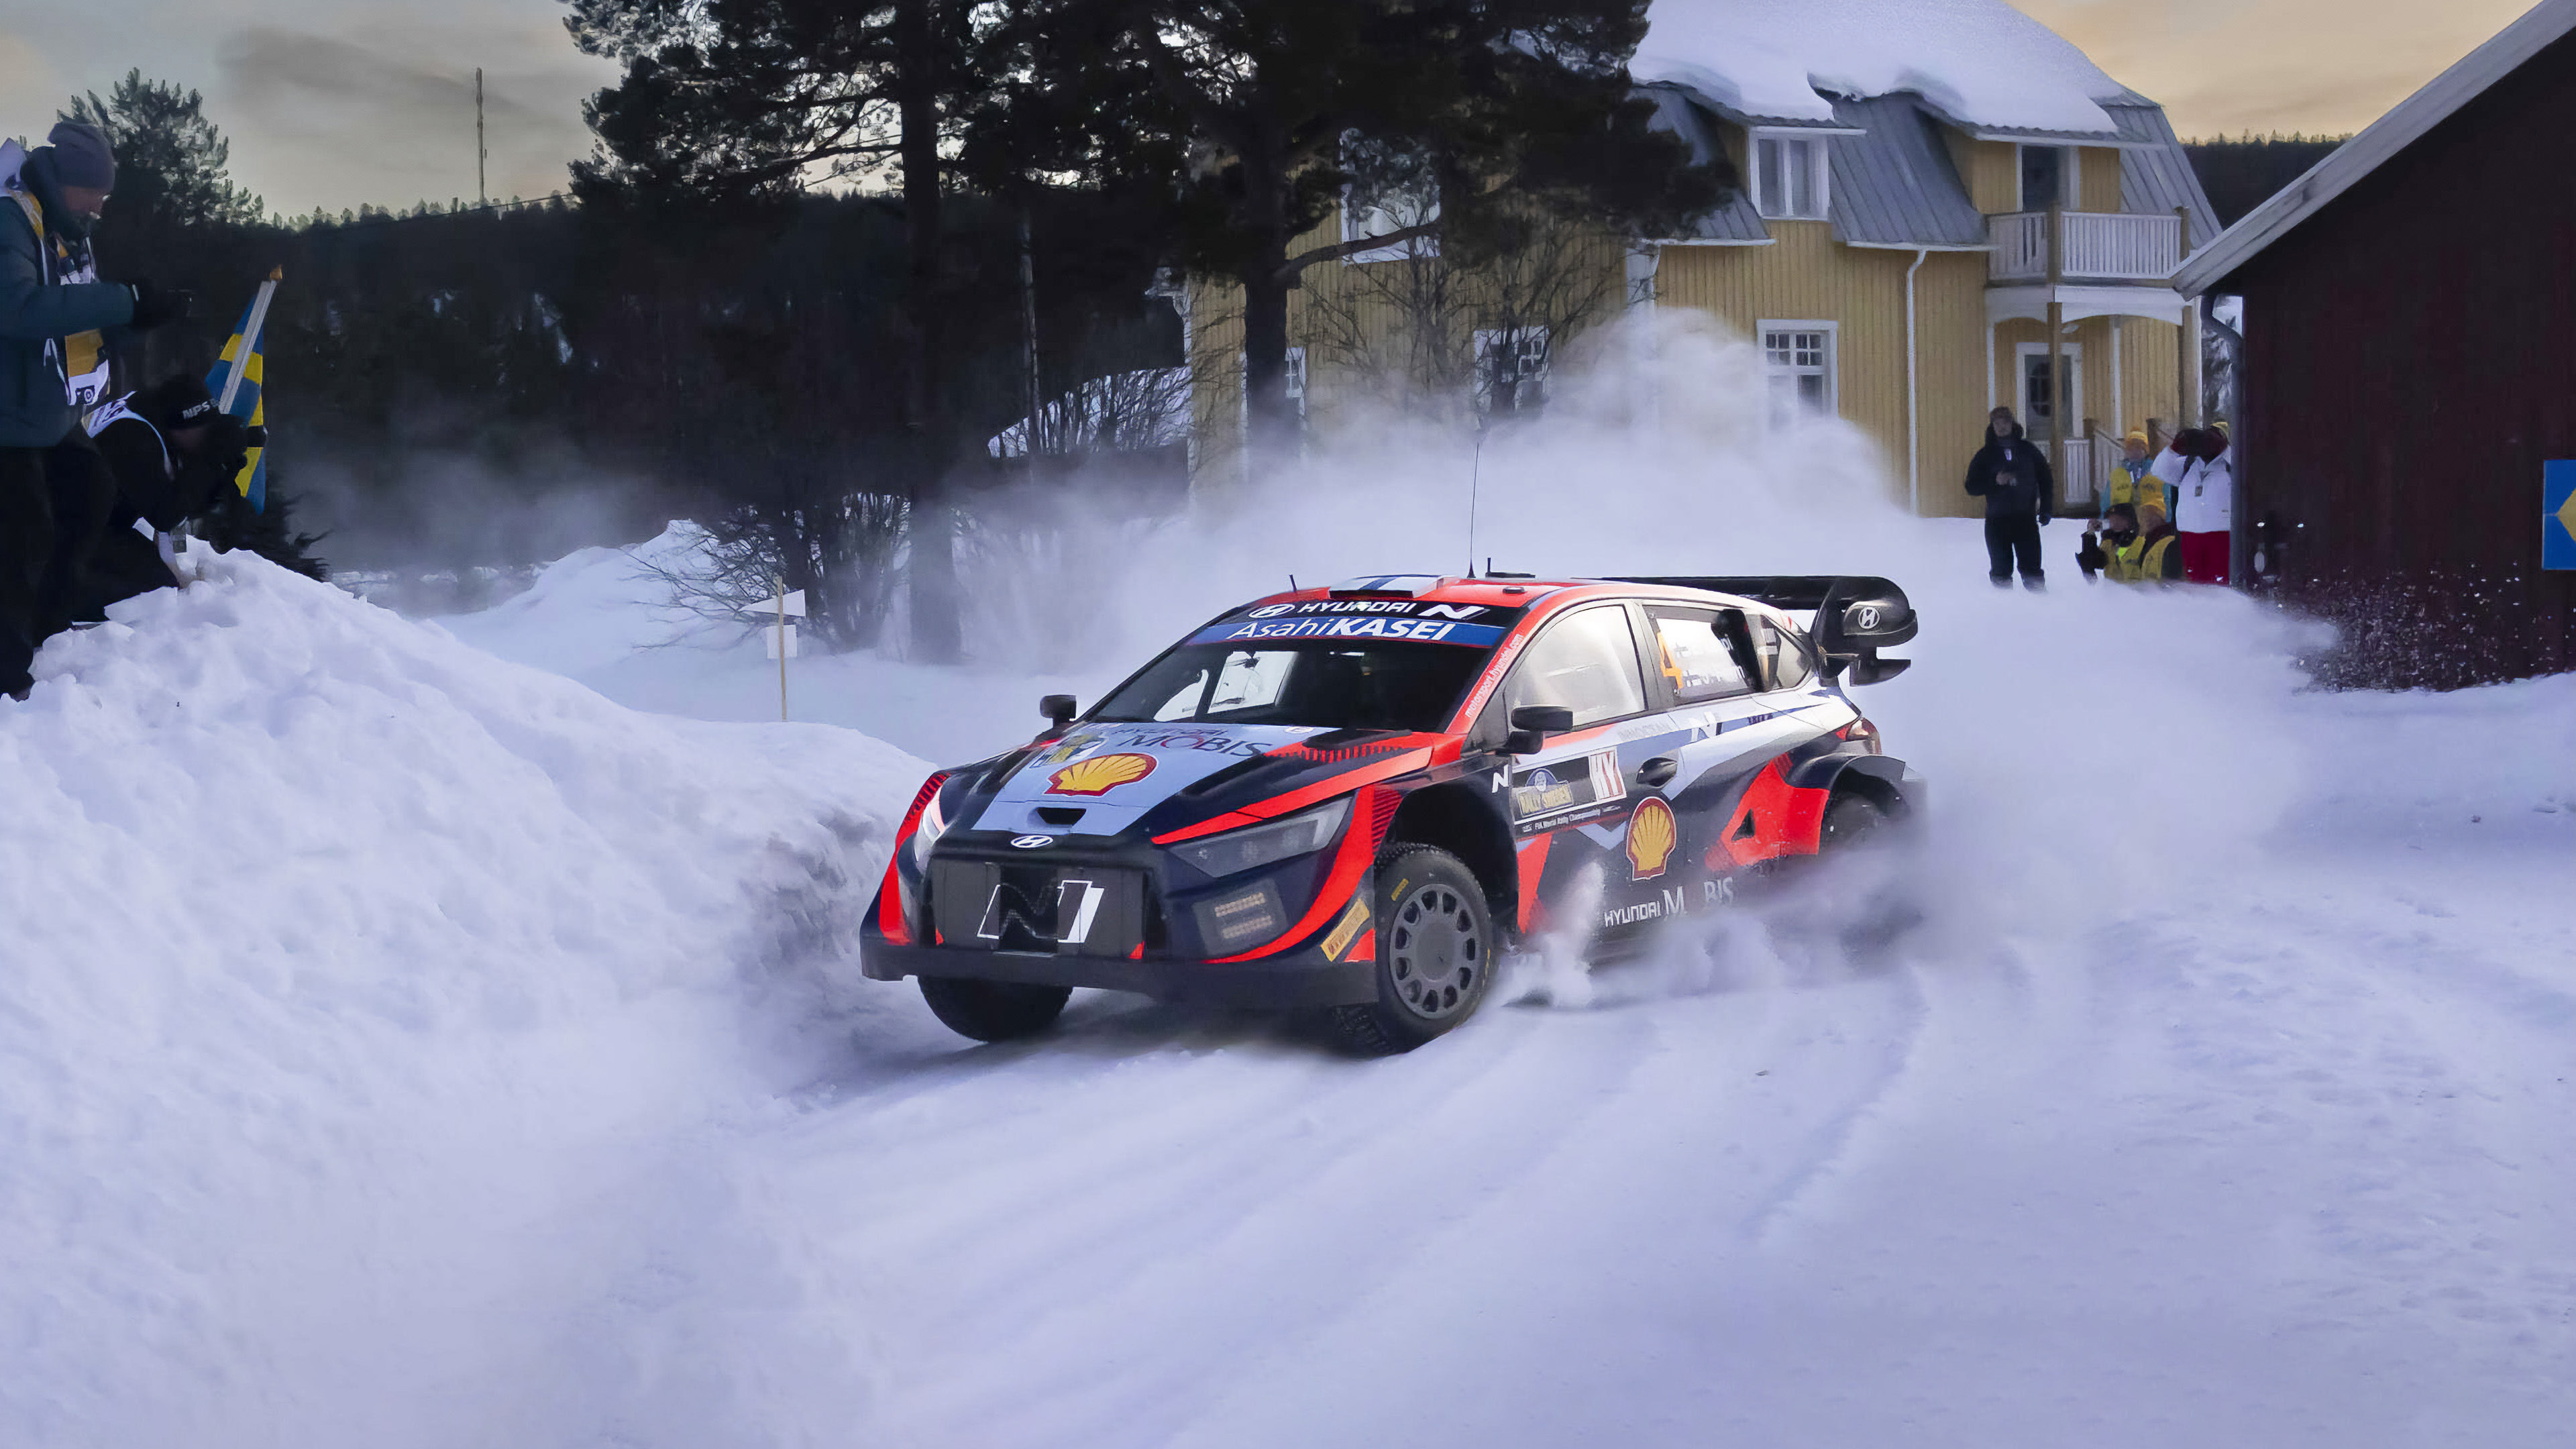 A Hyundai rally car driving on snow